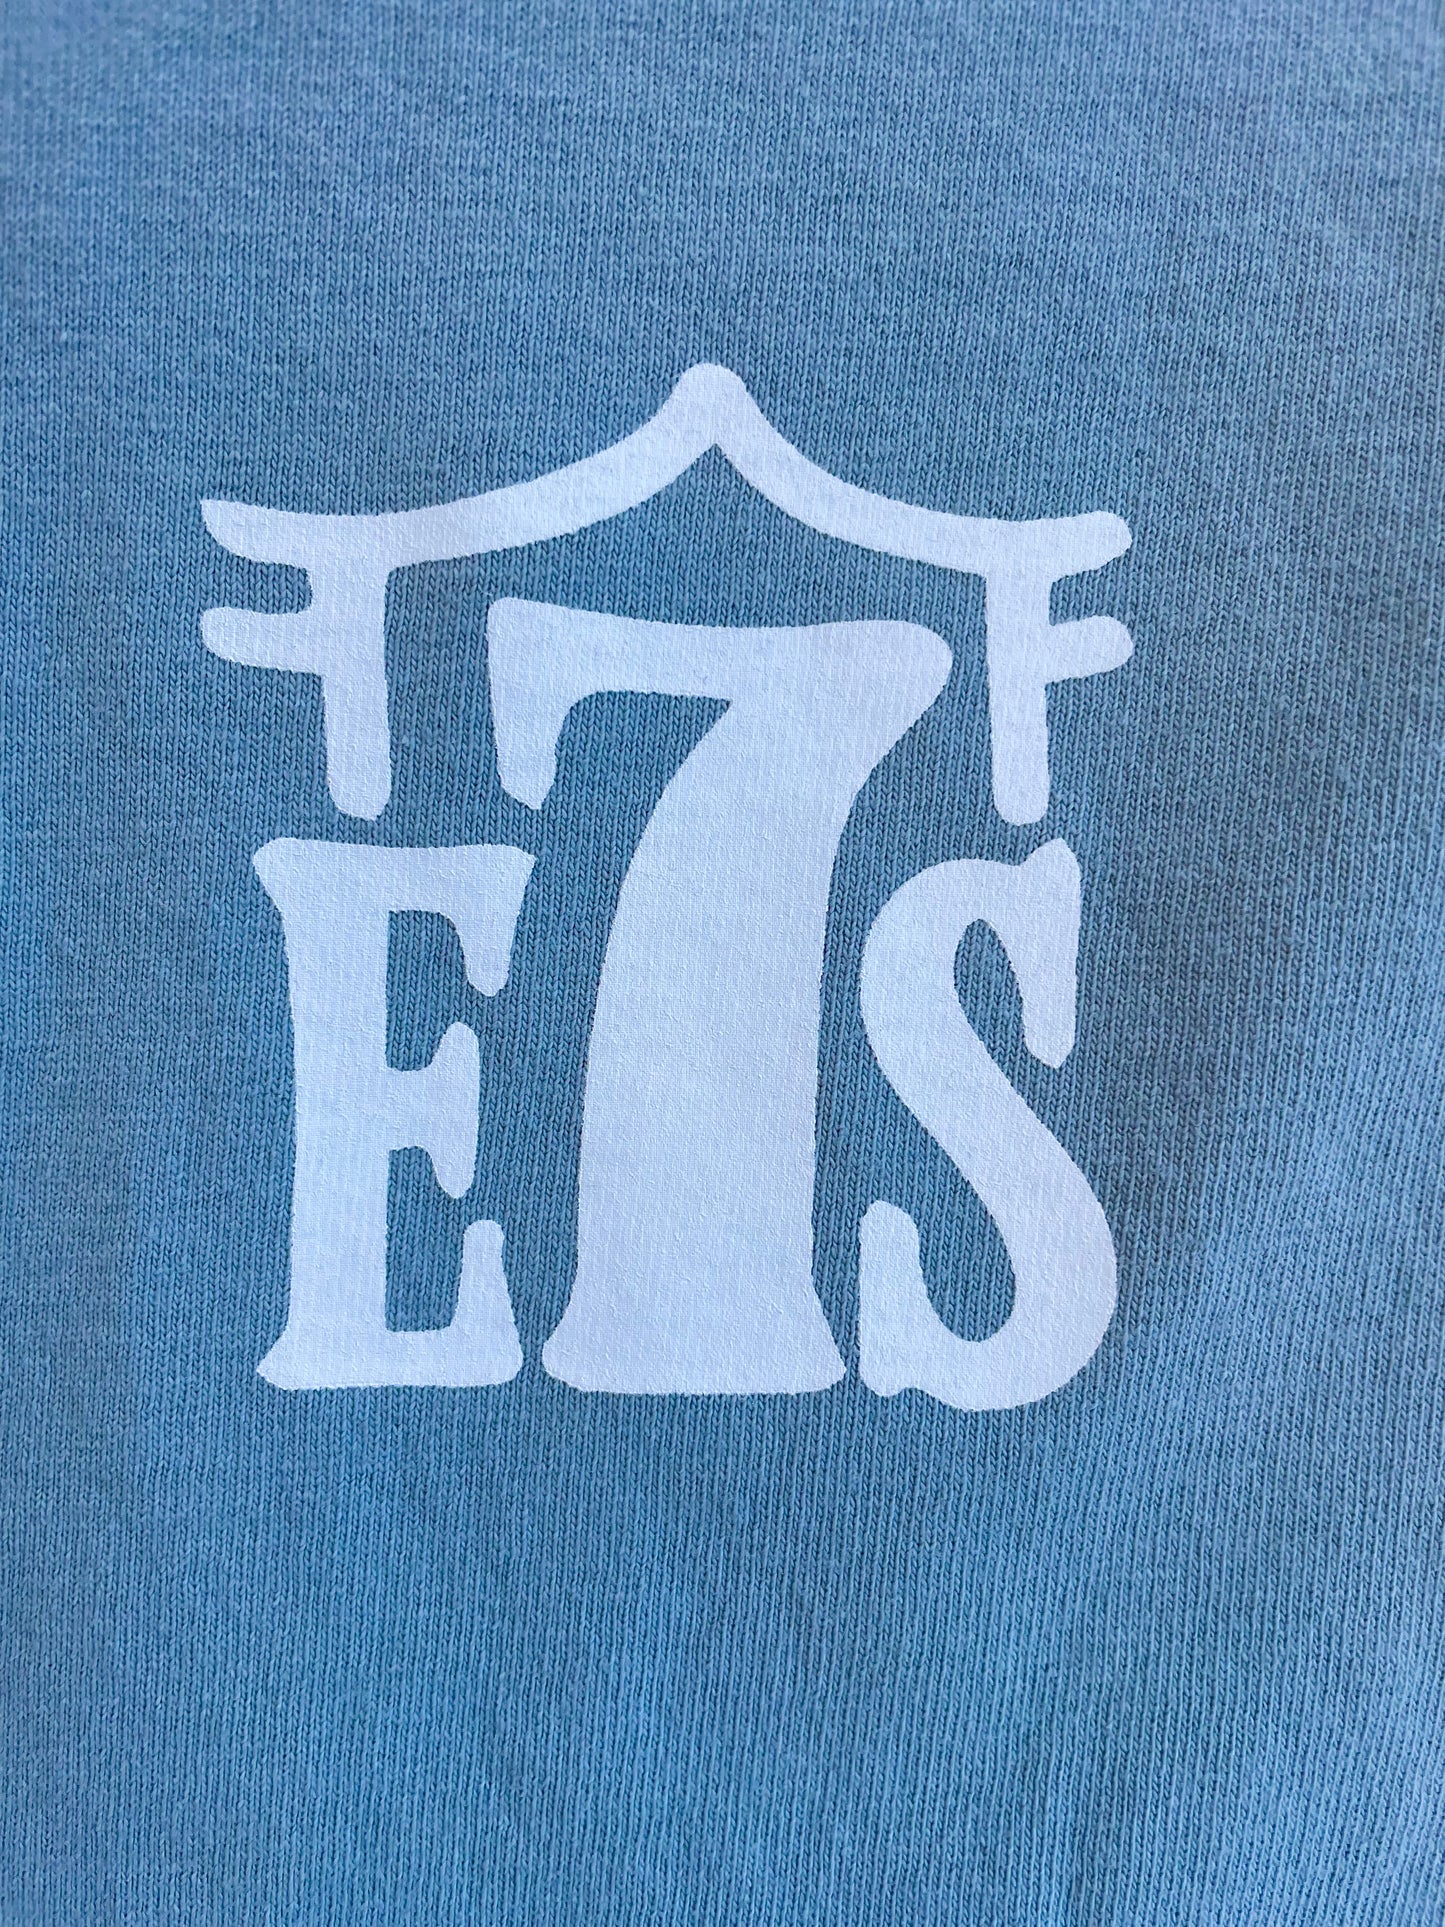 E7S Art Gallery Tshirt Unisex (Colors)